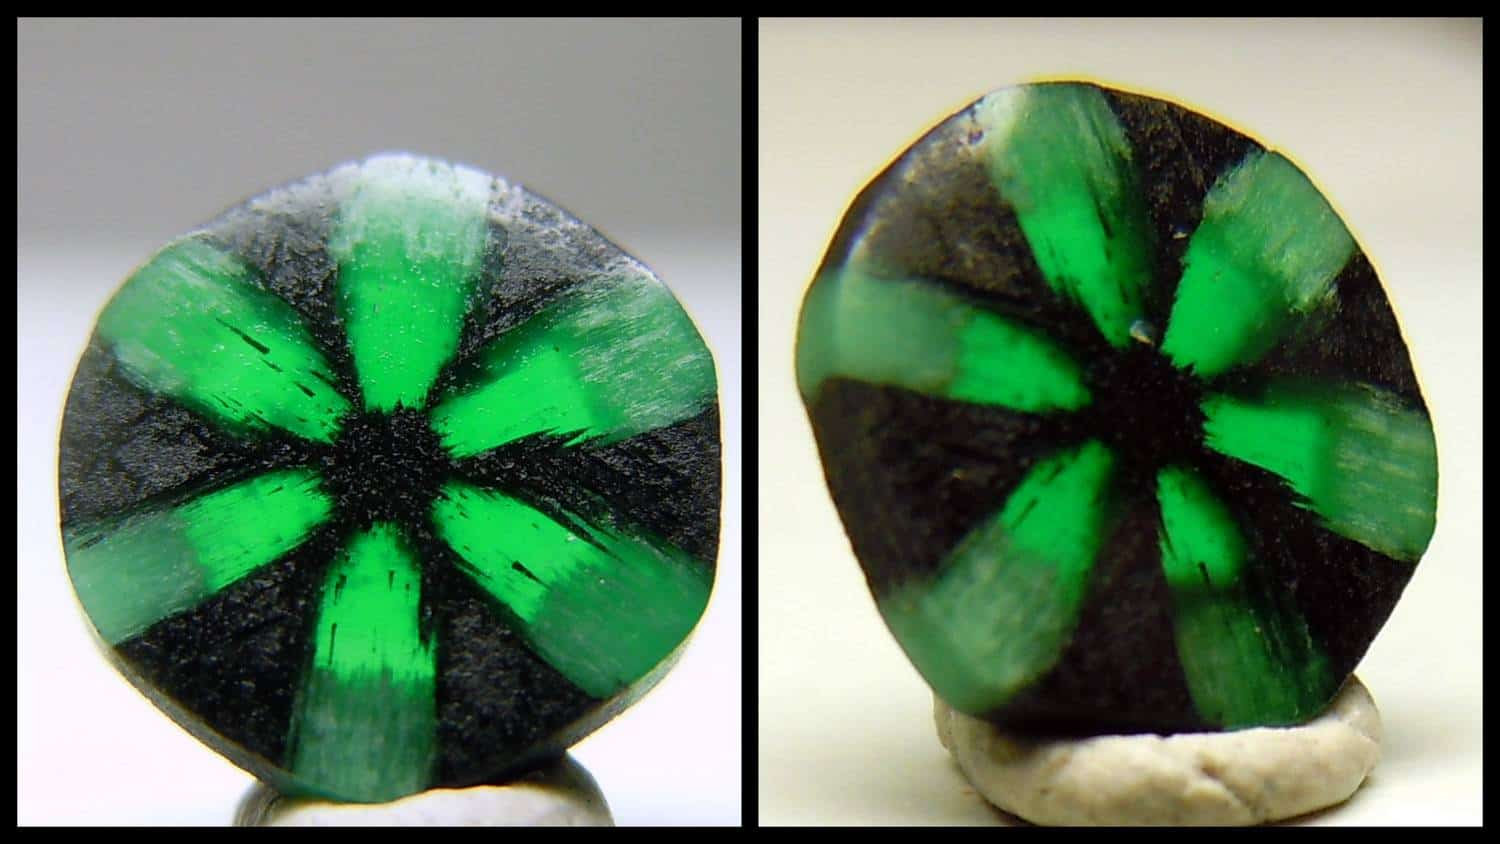 A genuine Trapiche Emerald, Luciana Barbosa / CC BY-SA (https://creativecommons.org/licenses/by-sa/3.0)